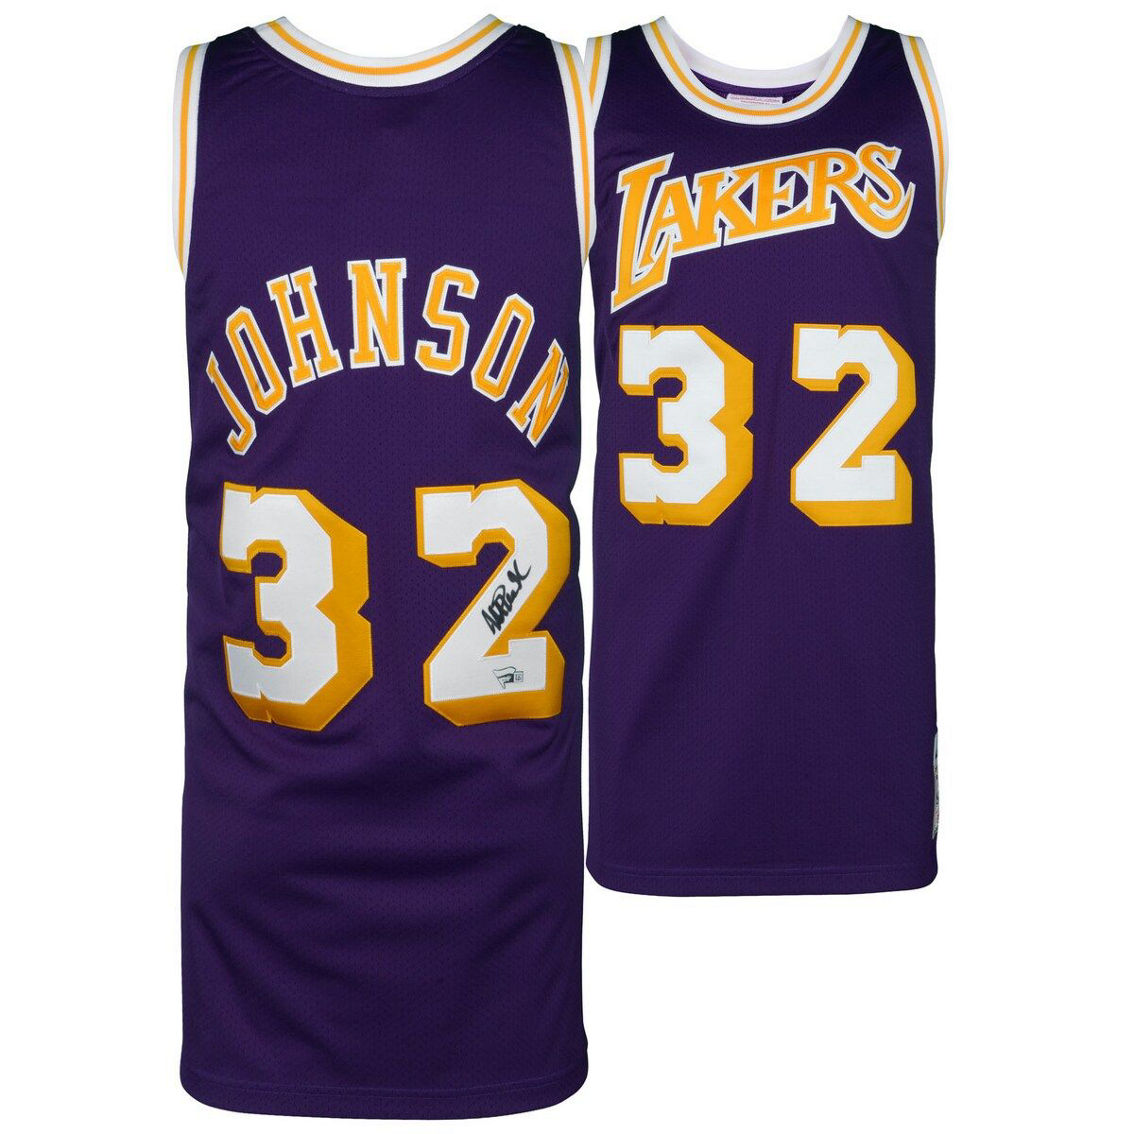 Fanatics Authentic Magic Johnson Los Angeles Lakers Autographed Purple Authentic Jersey